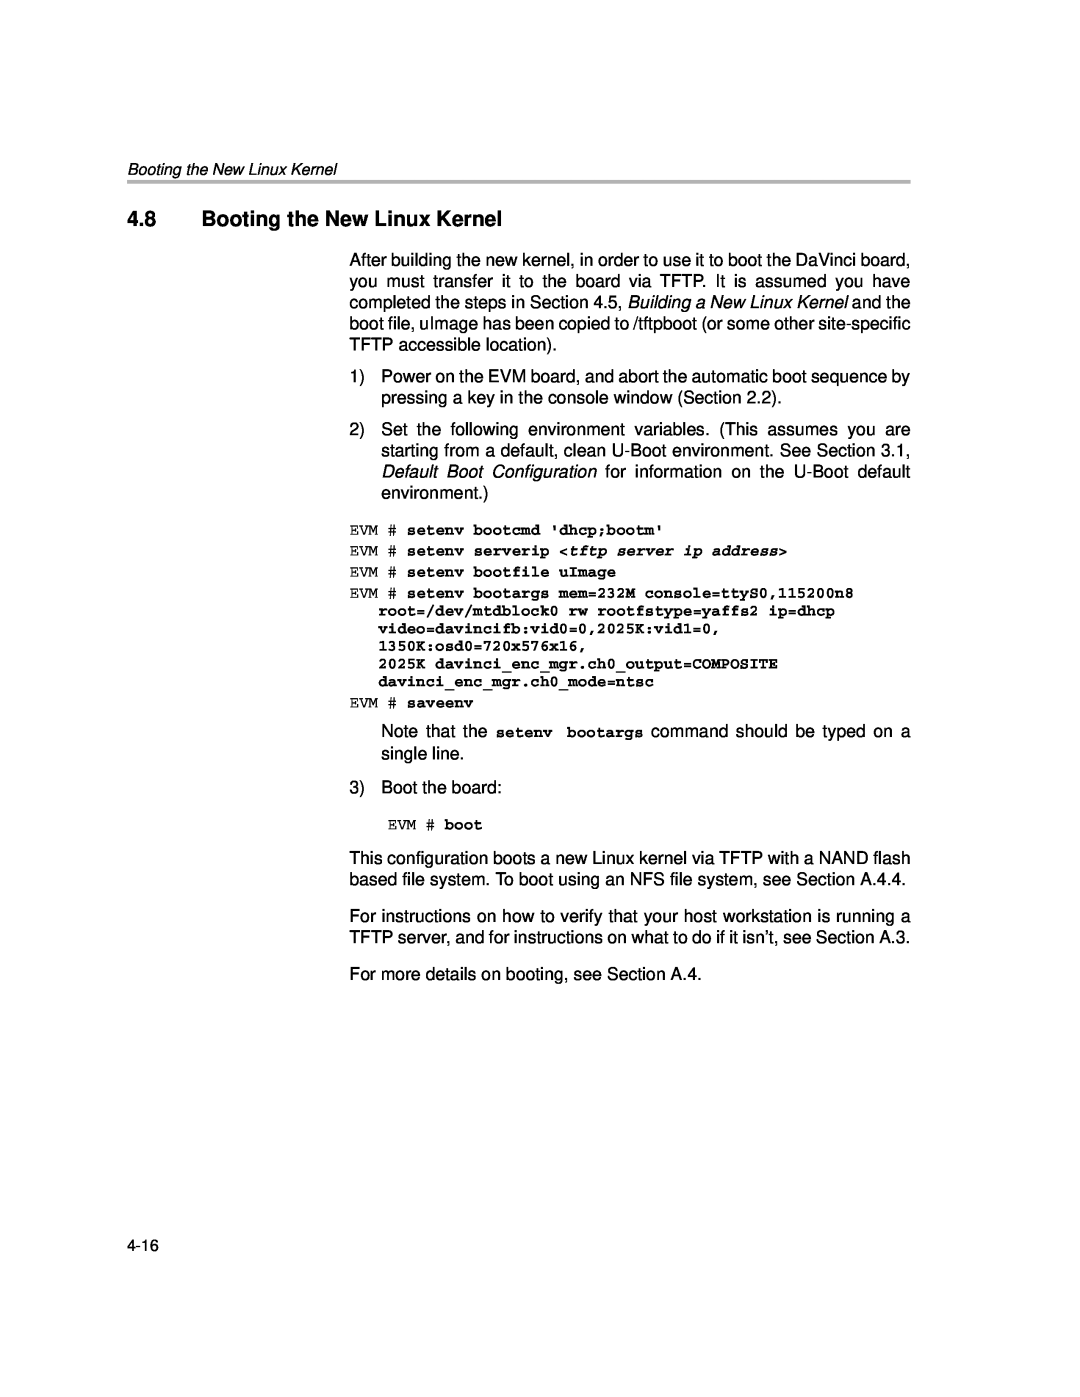 Texas Instruments TMS320DM357 DVEVM v2.05 manual 4.8Booting the New Linux Kernel 